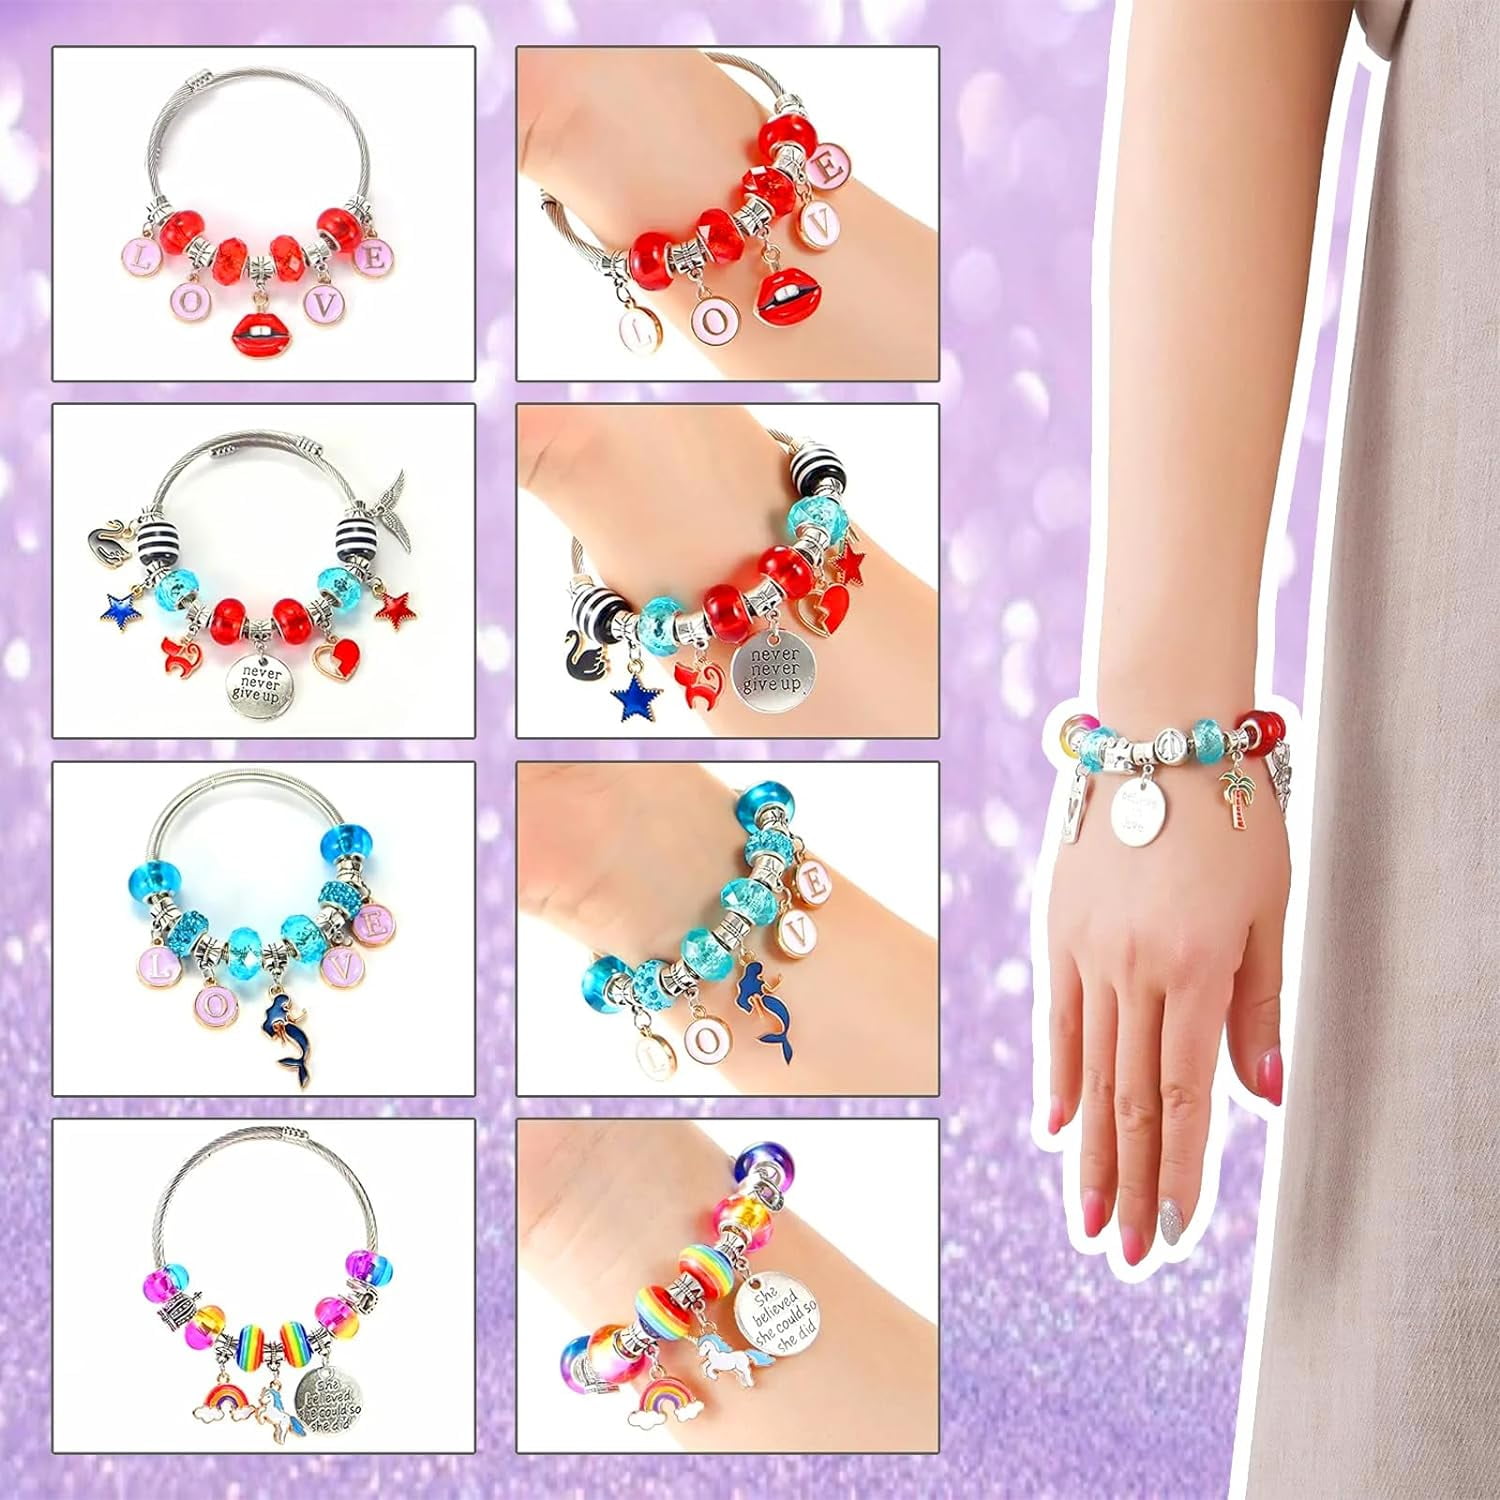 Charm Bracelet Making Kit Gifts Set for Girls Teens Age 8-12 791523994074